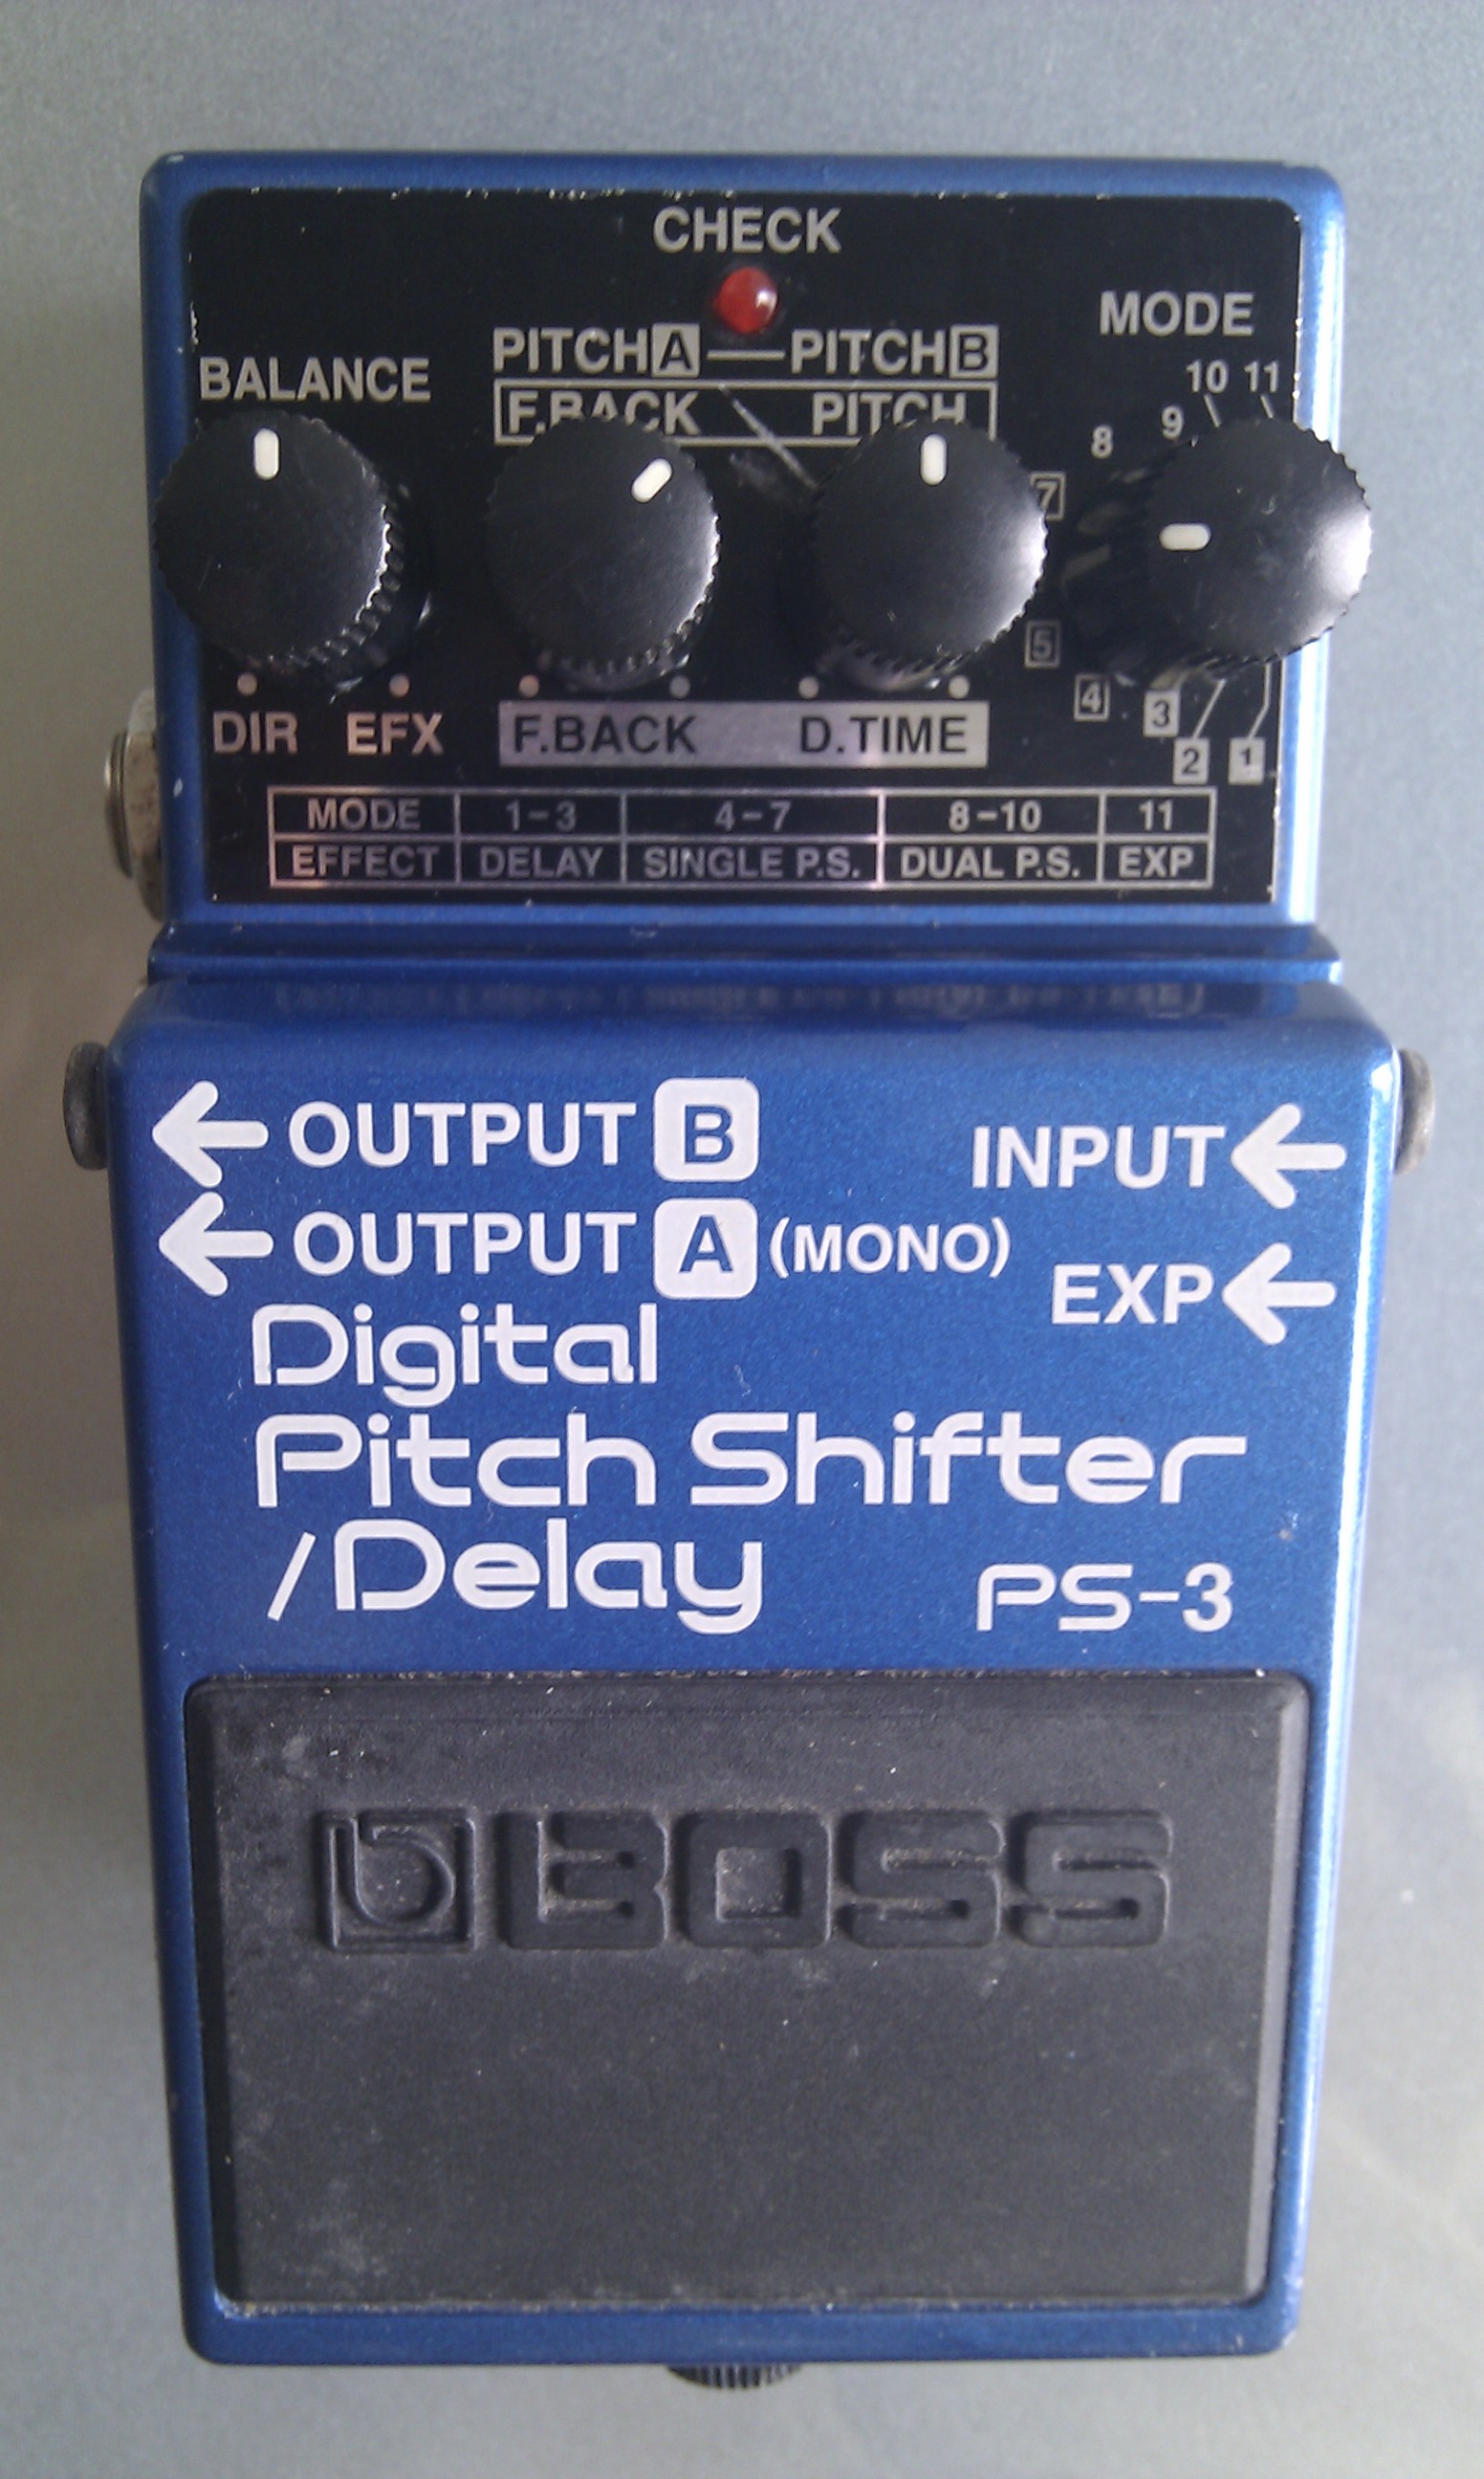 PS-3 Digital Pitch Shifter/Delay Boss - Audiofanzine